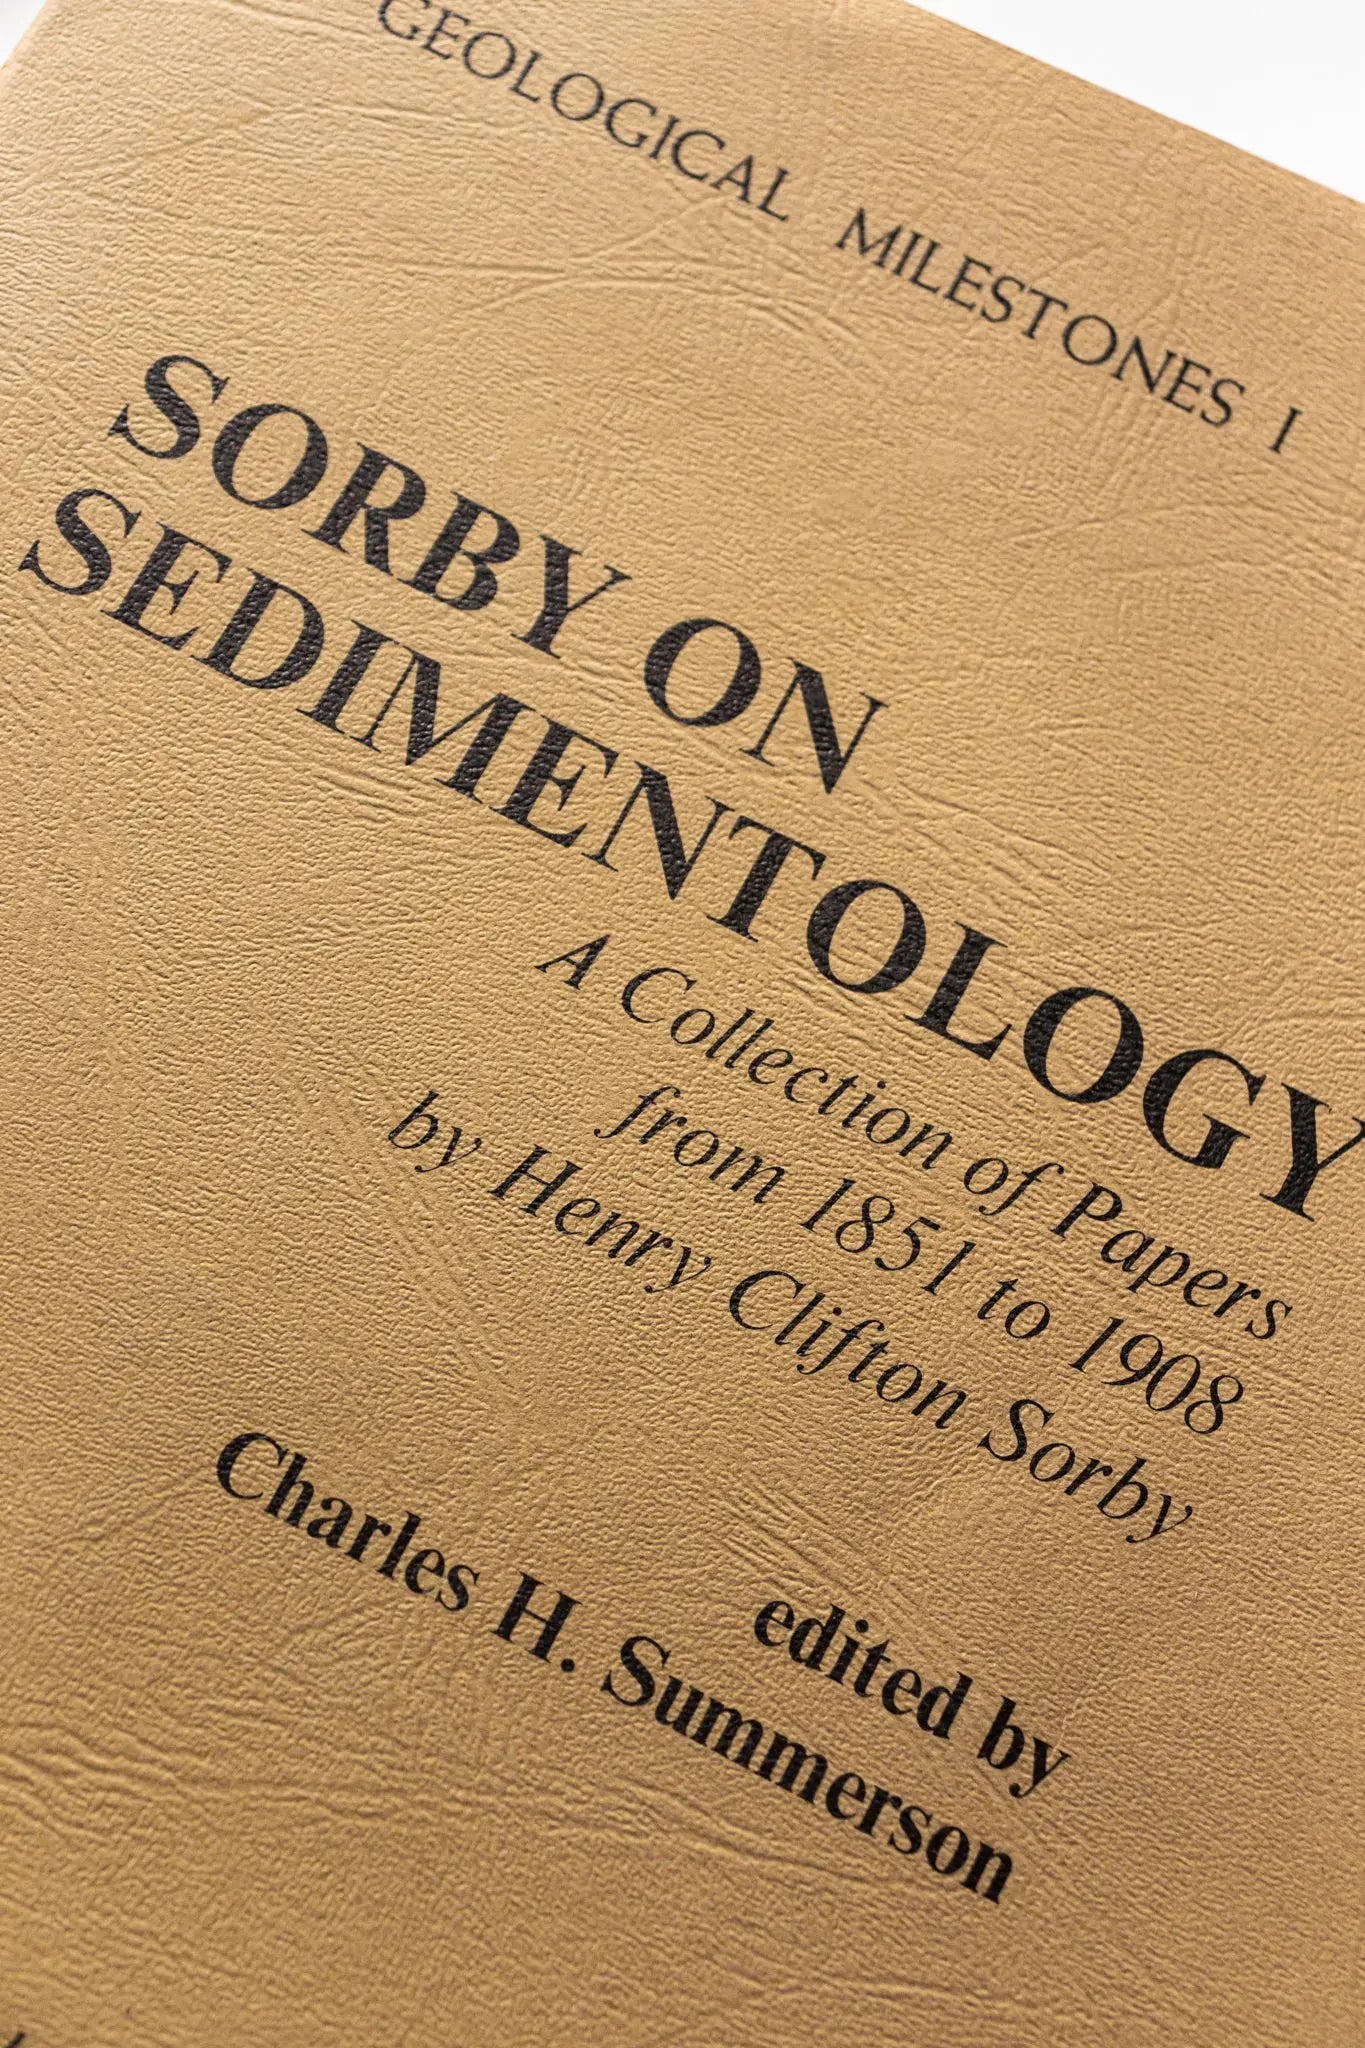 Sorby on Sedimentology